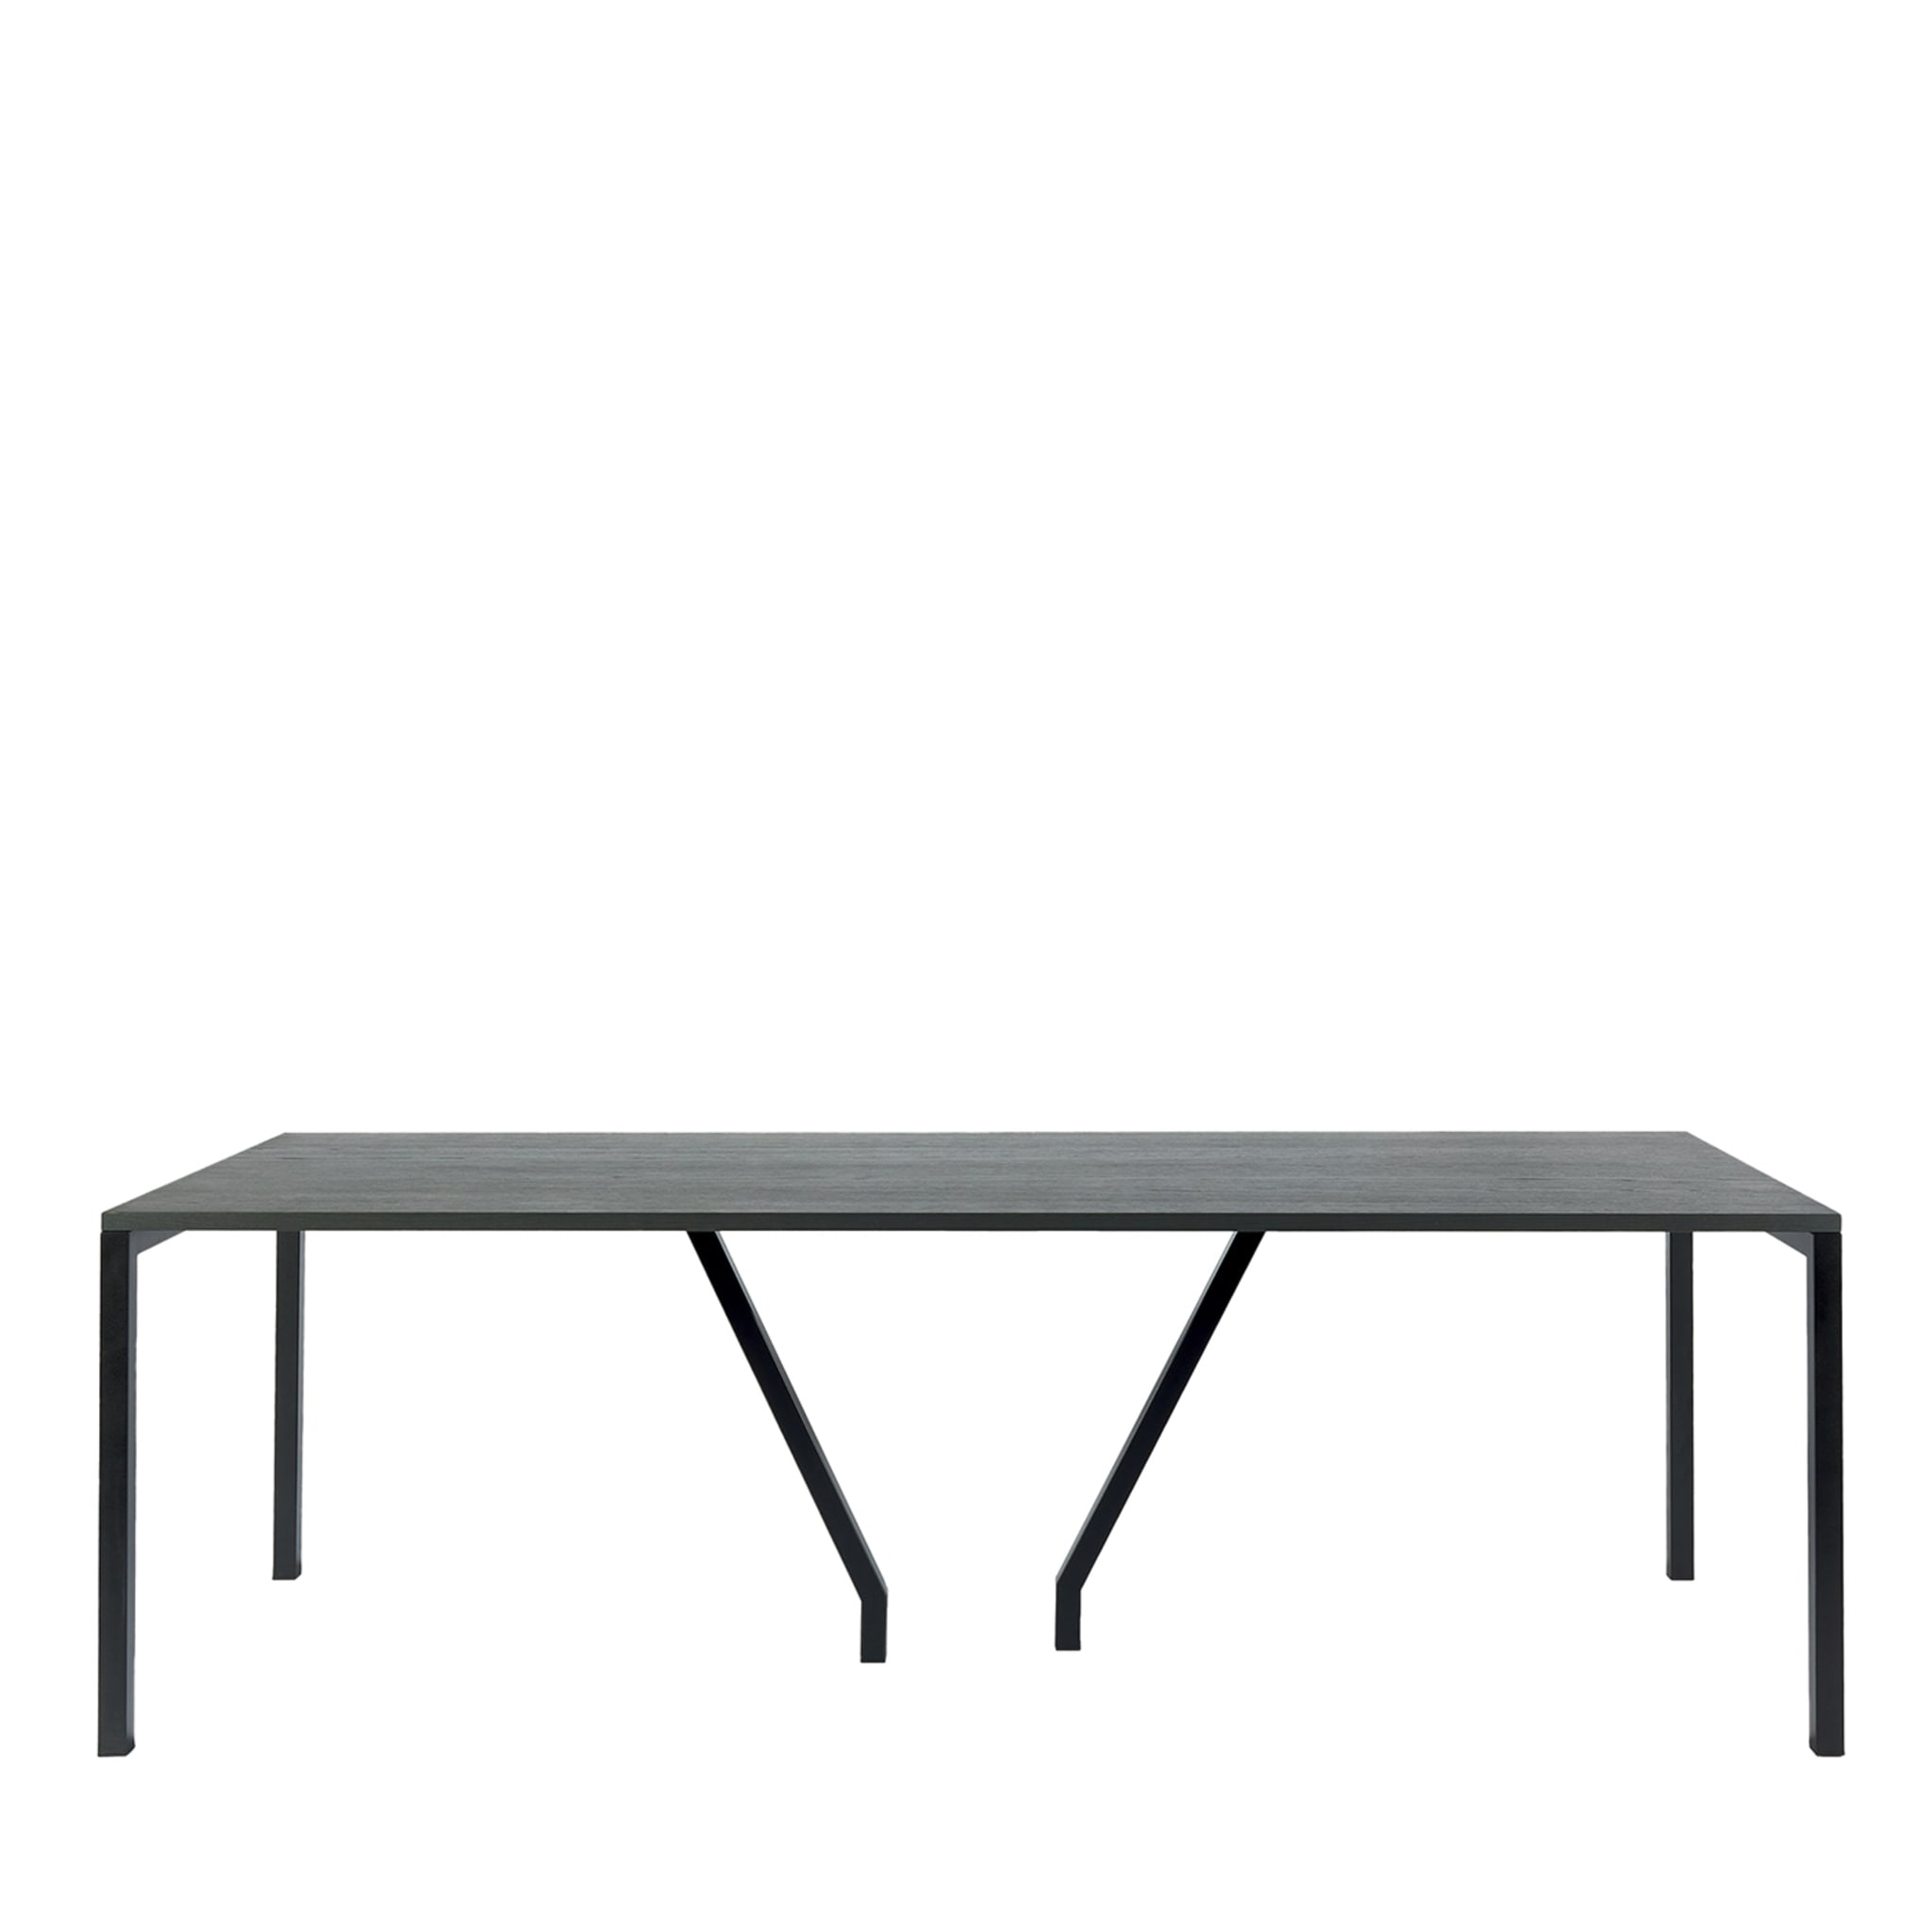 Cavalletta Large Rectangular Black Table by Studiocharlie - Main view